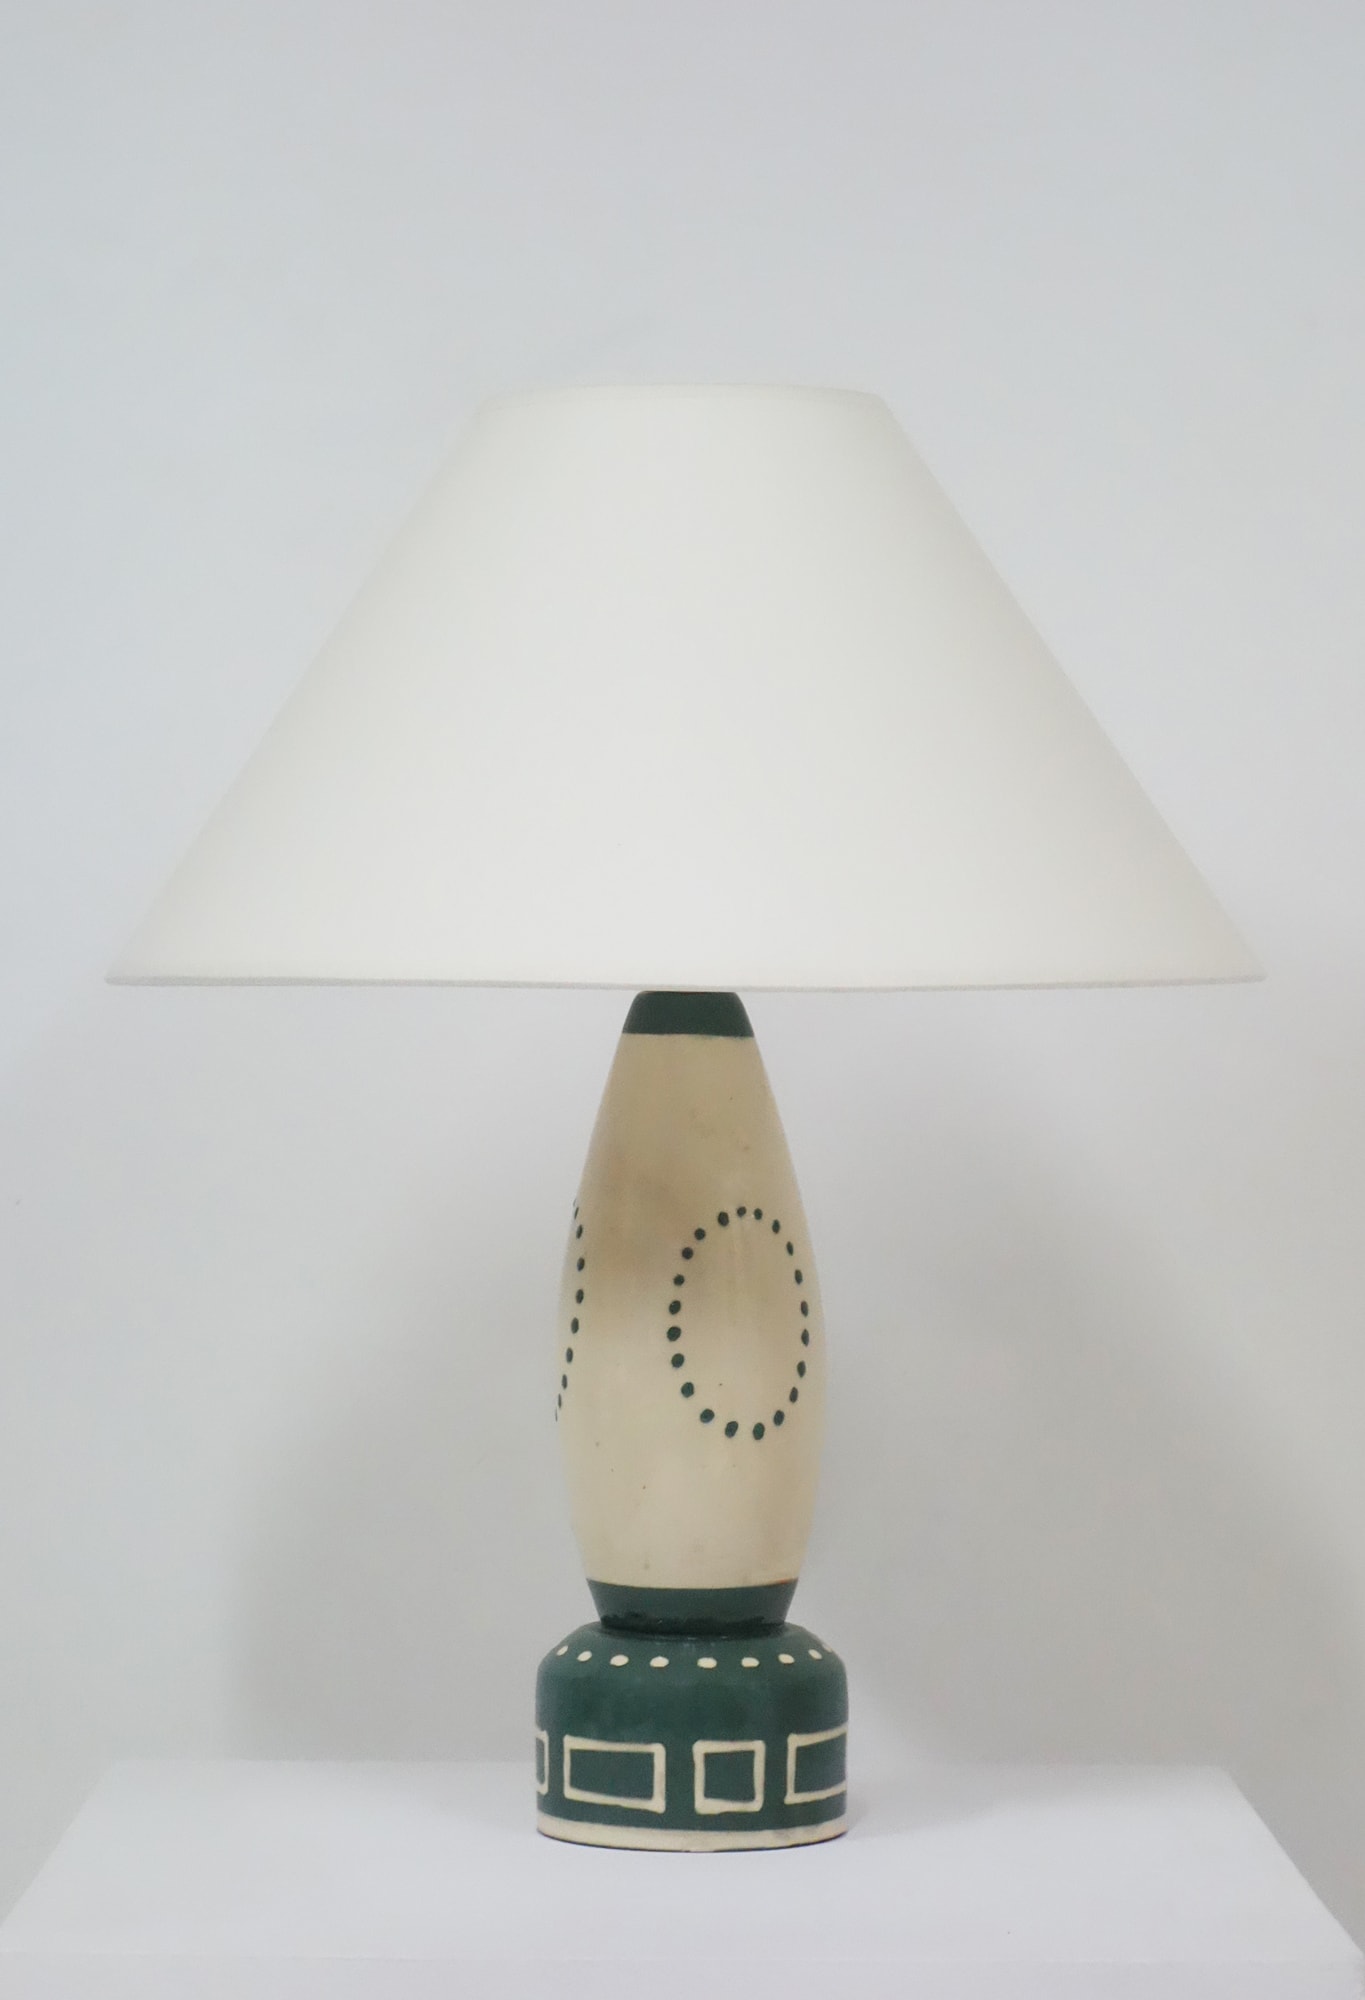 Francis Jourdain, Ceramic table lamp (sold), vue 01